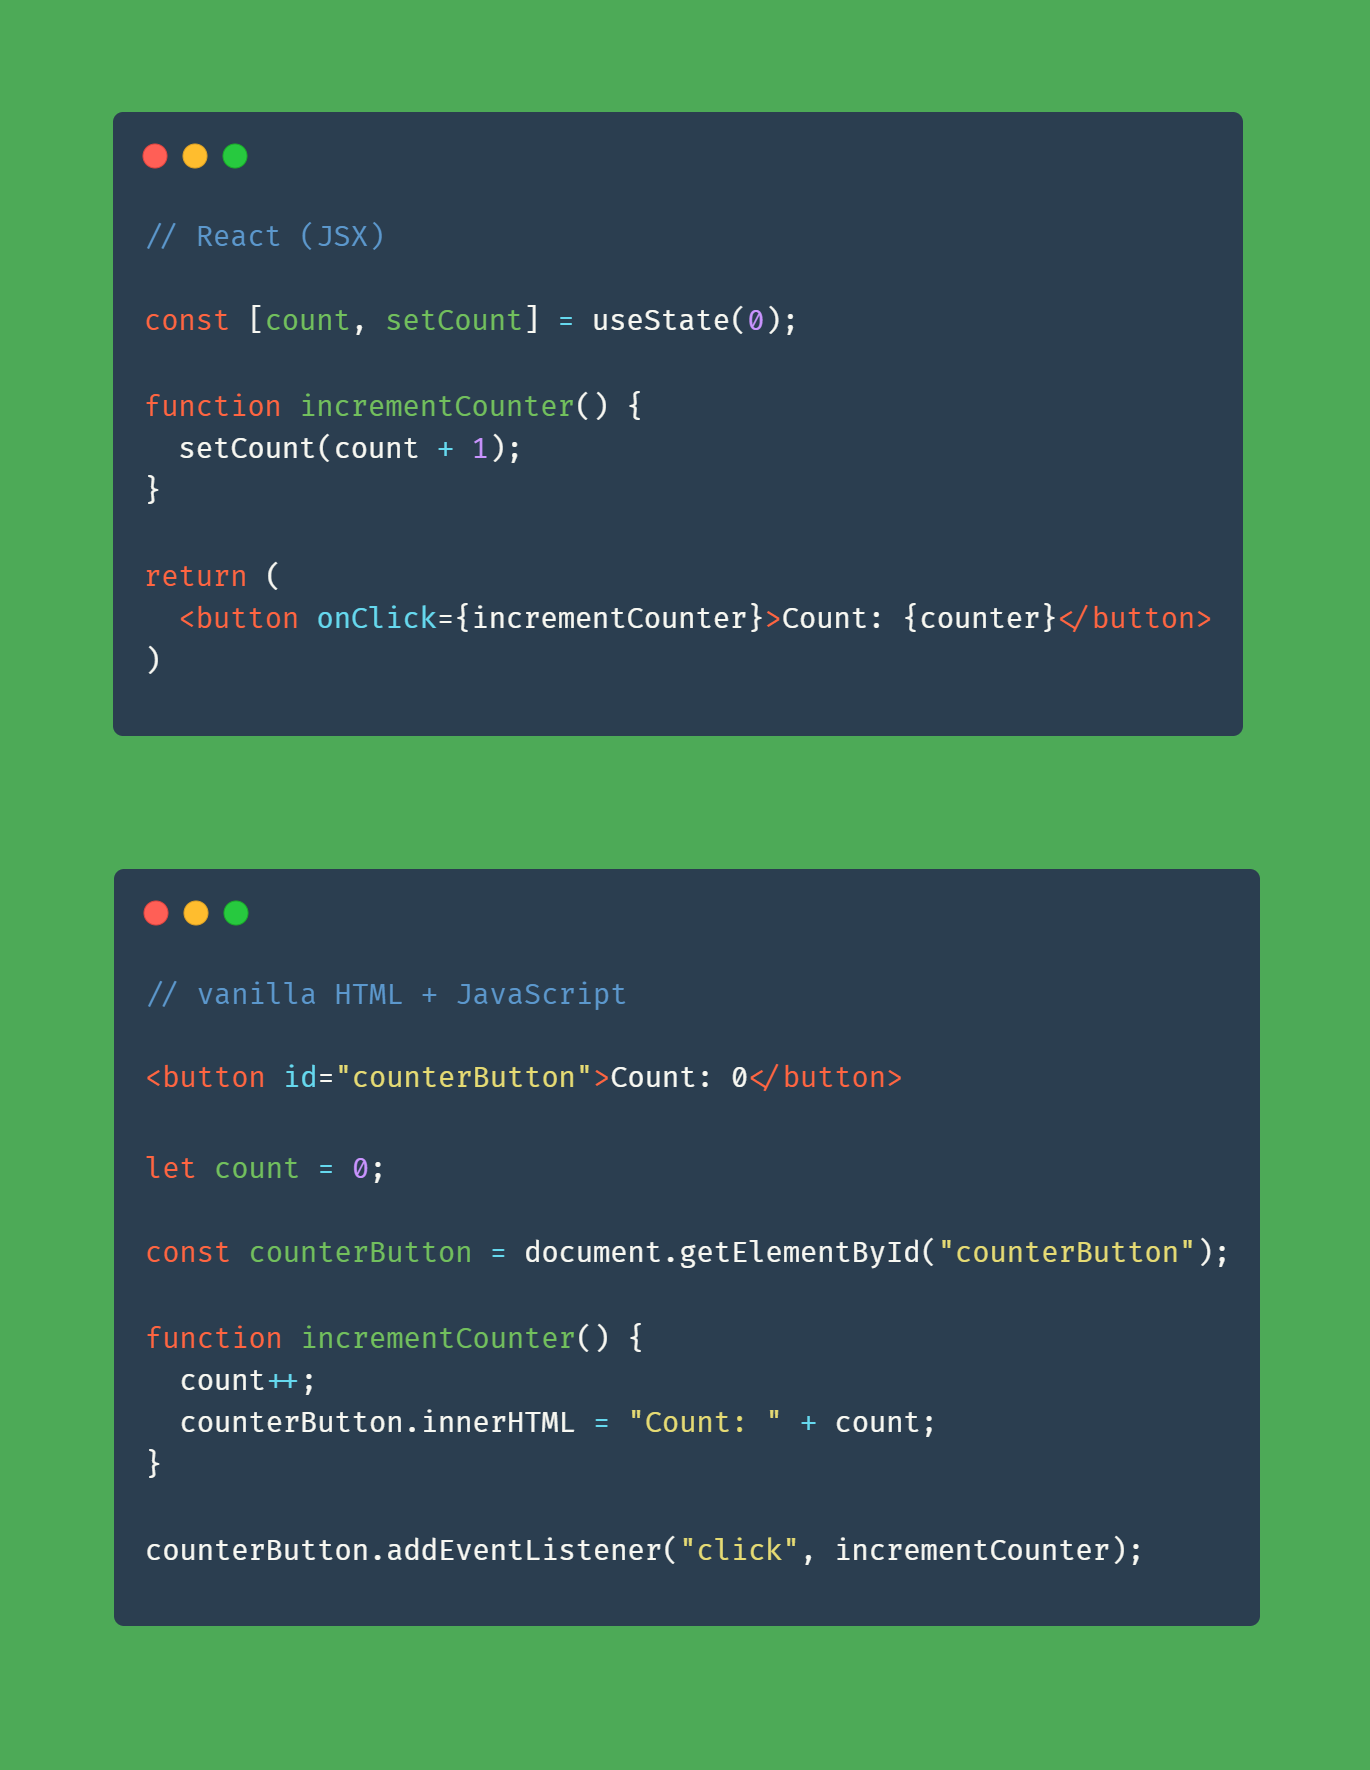 A comparison of imperative vanilla HTML + JavaScript code and declarative React code